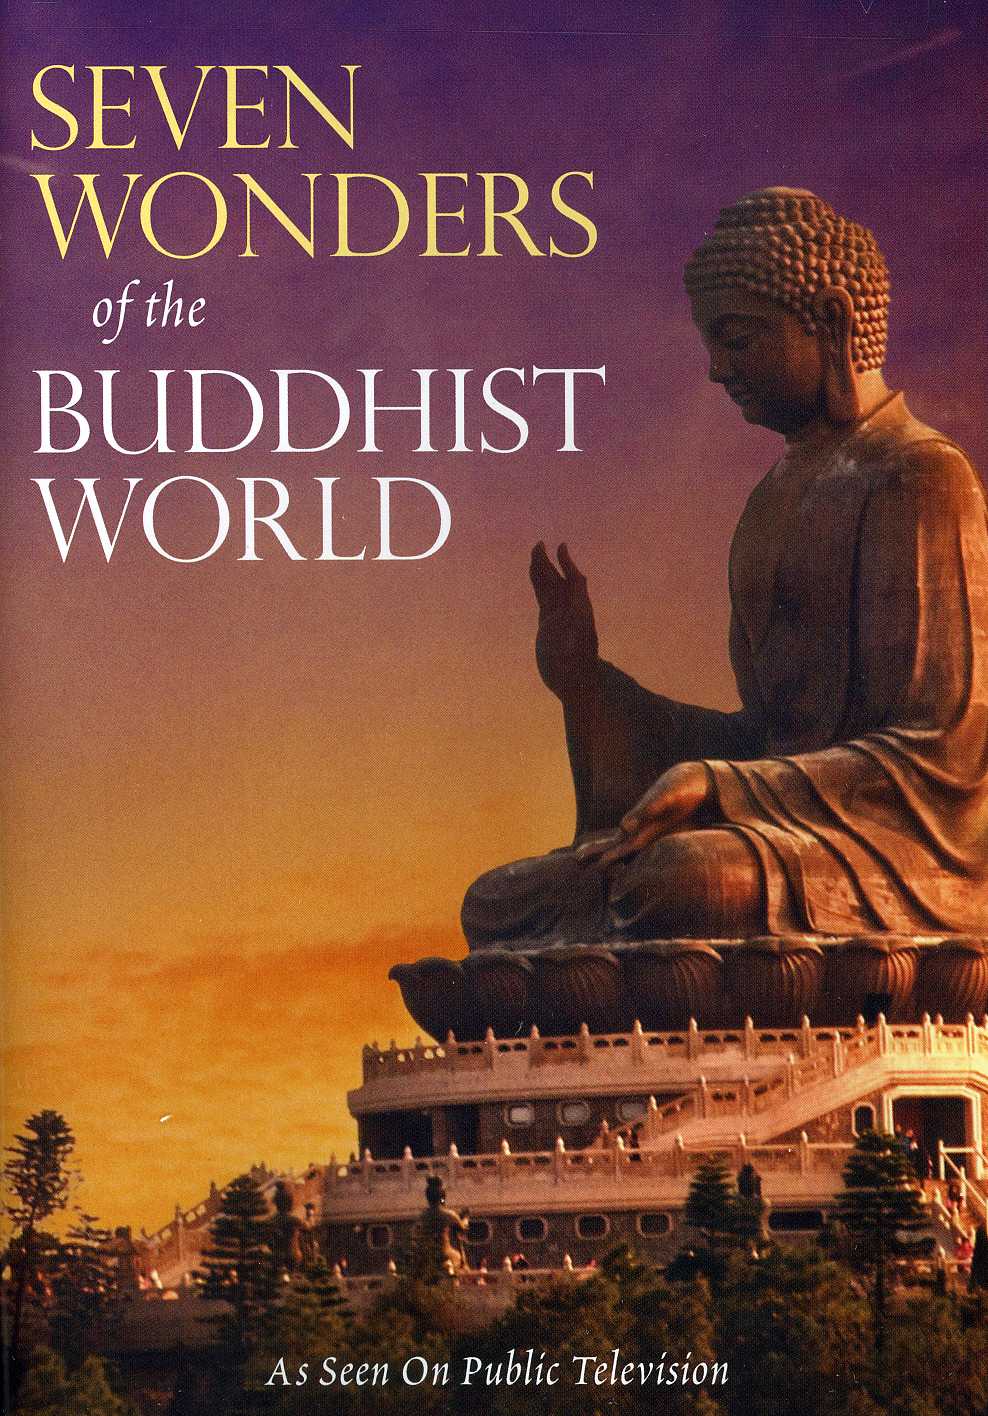 SEVEN WONDERS OF THE BUDDHIST WORLD